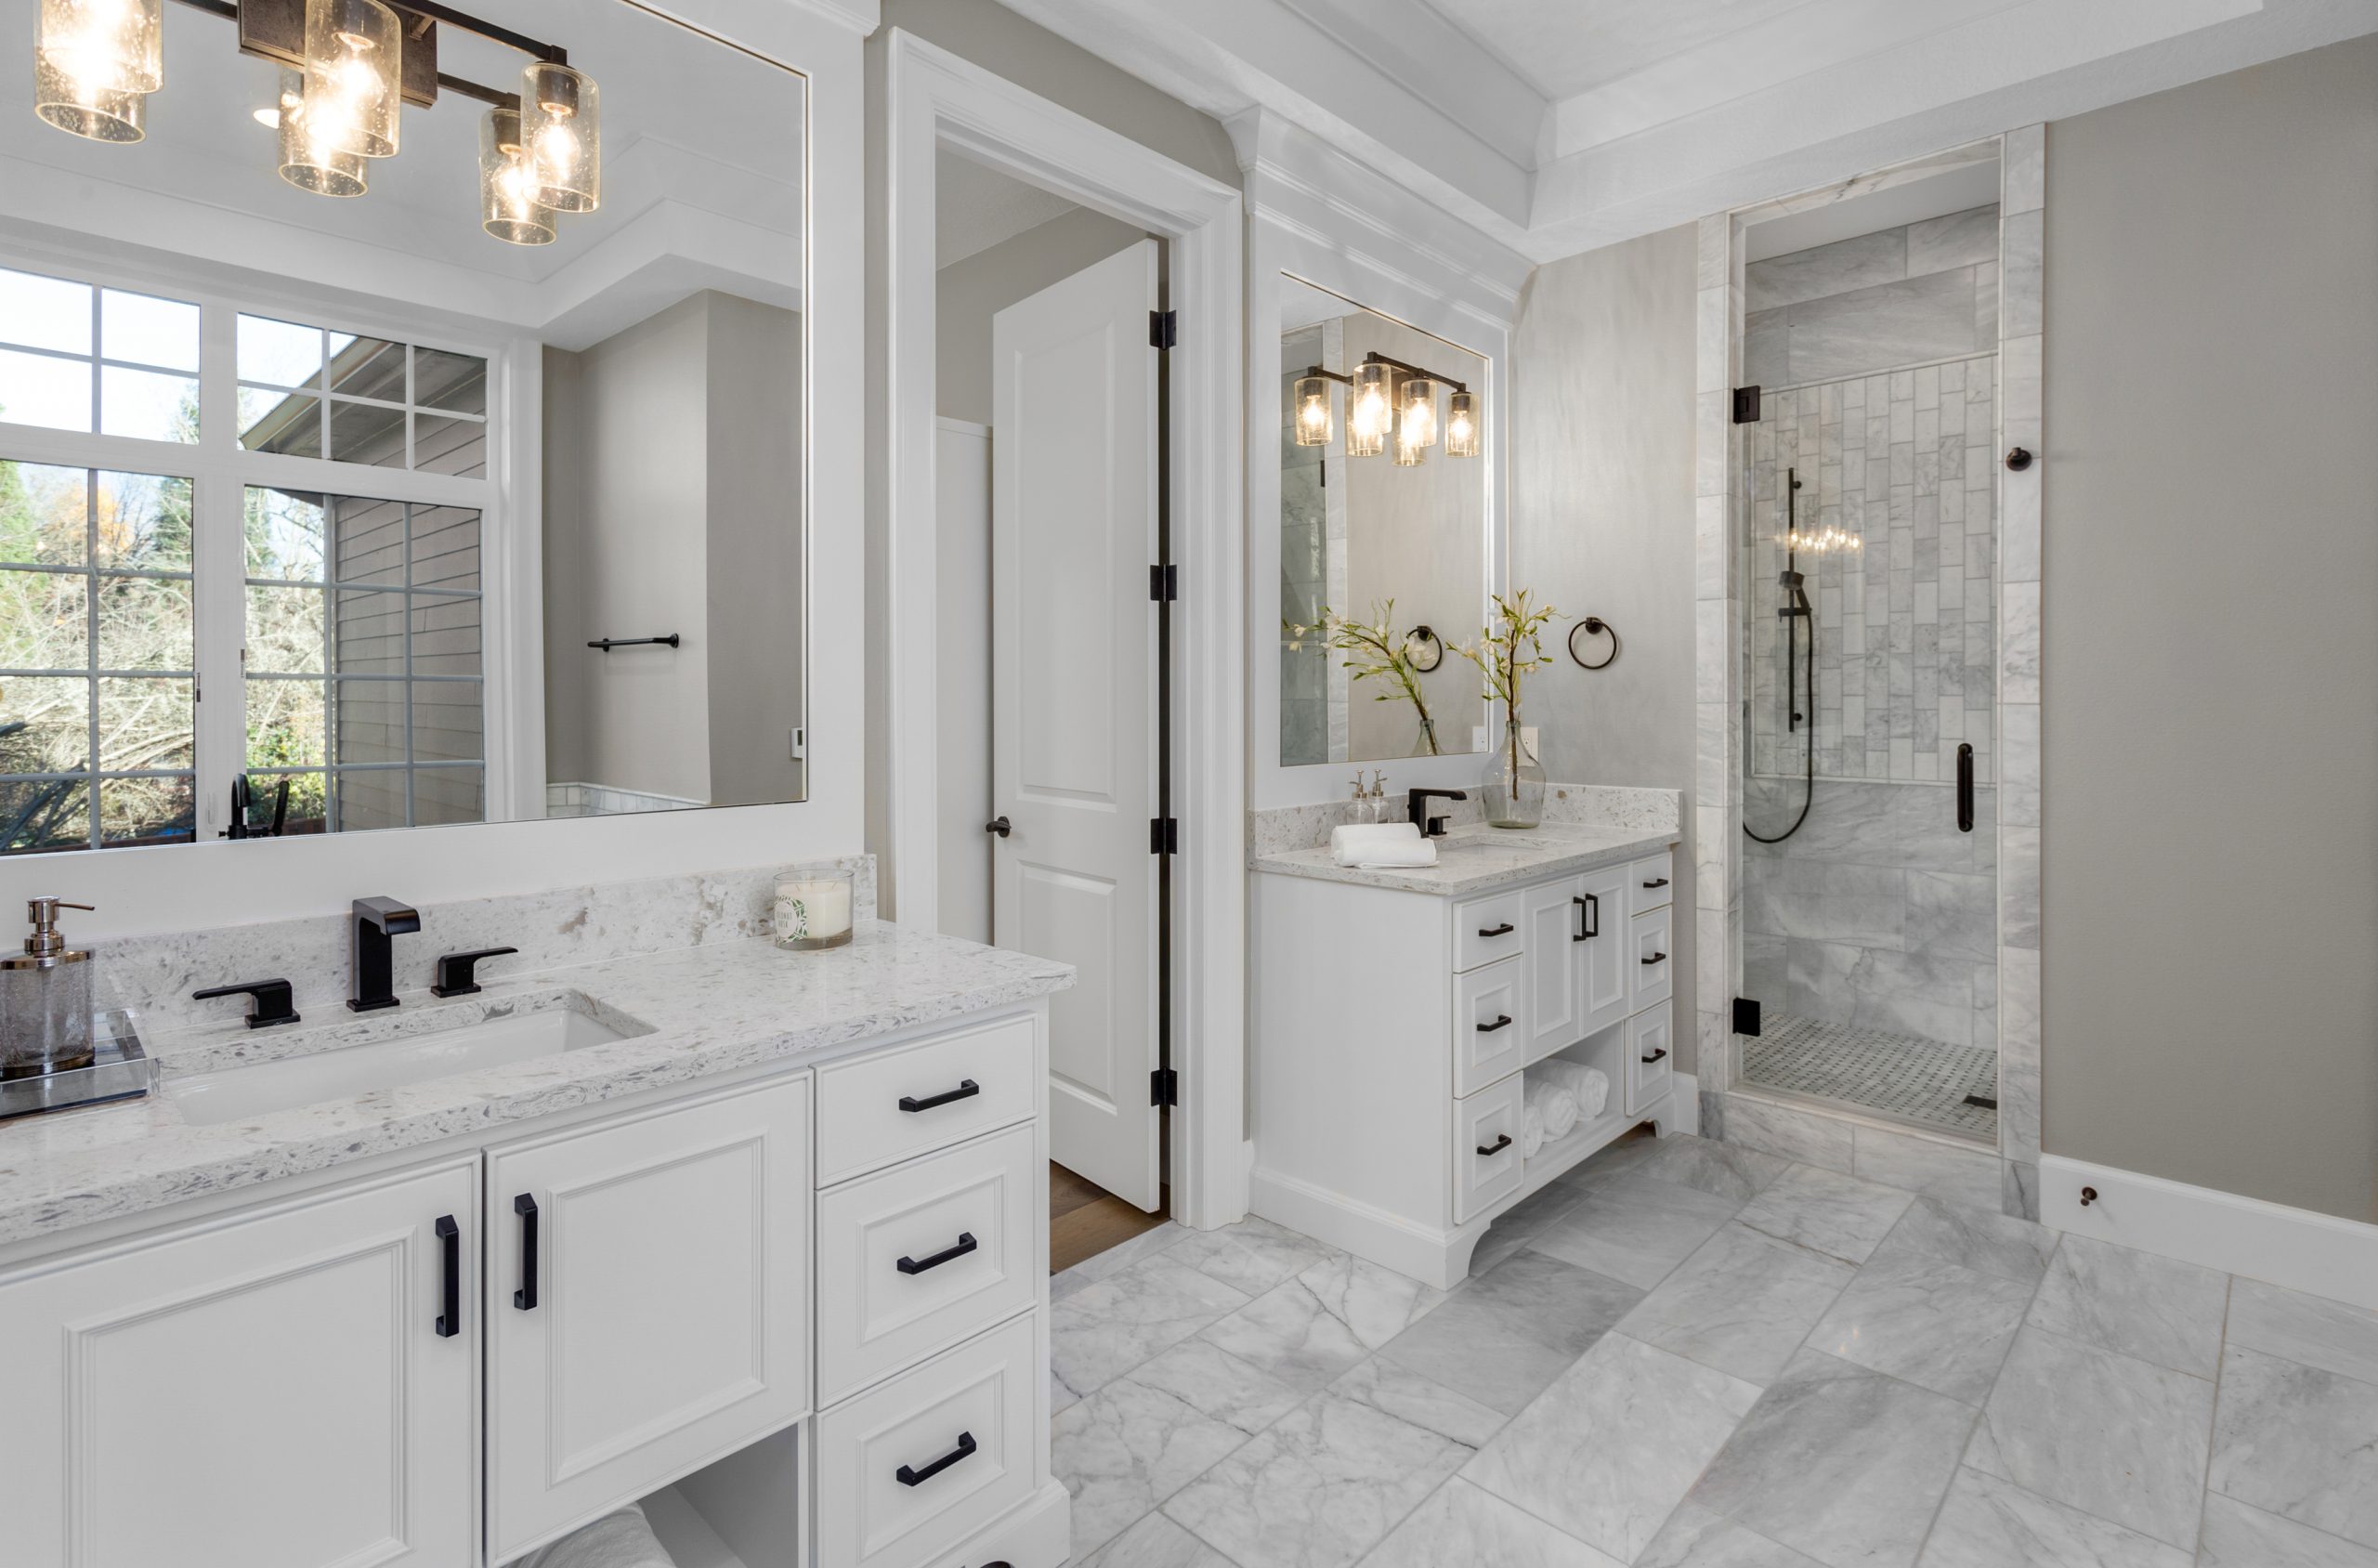 Beautiful,Bathroom,In,New,Luxury,Home,With,Two,Vanities,,Sinks,